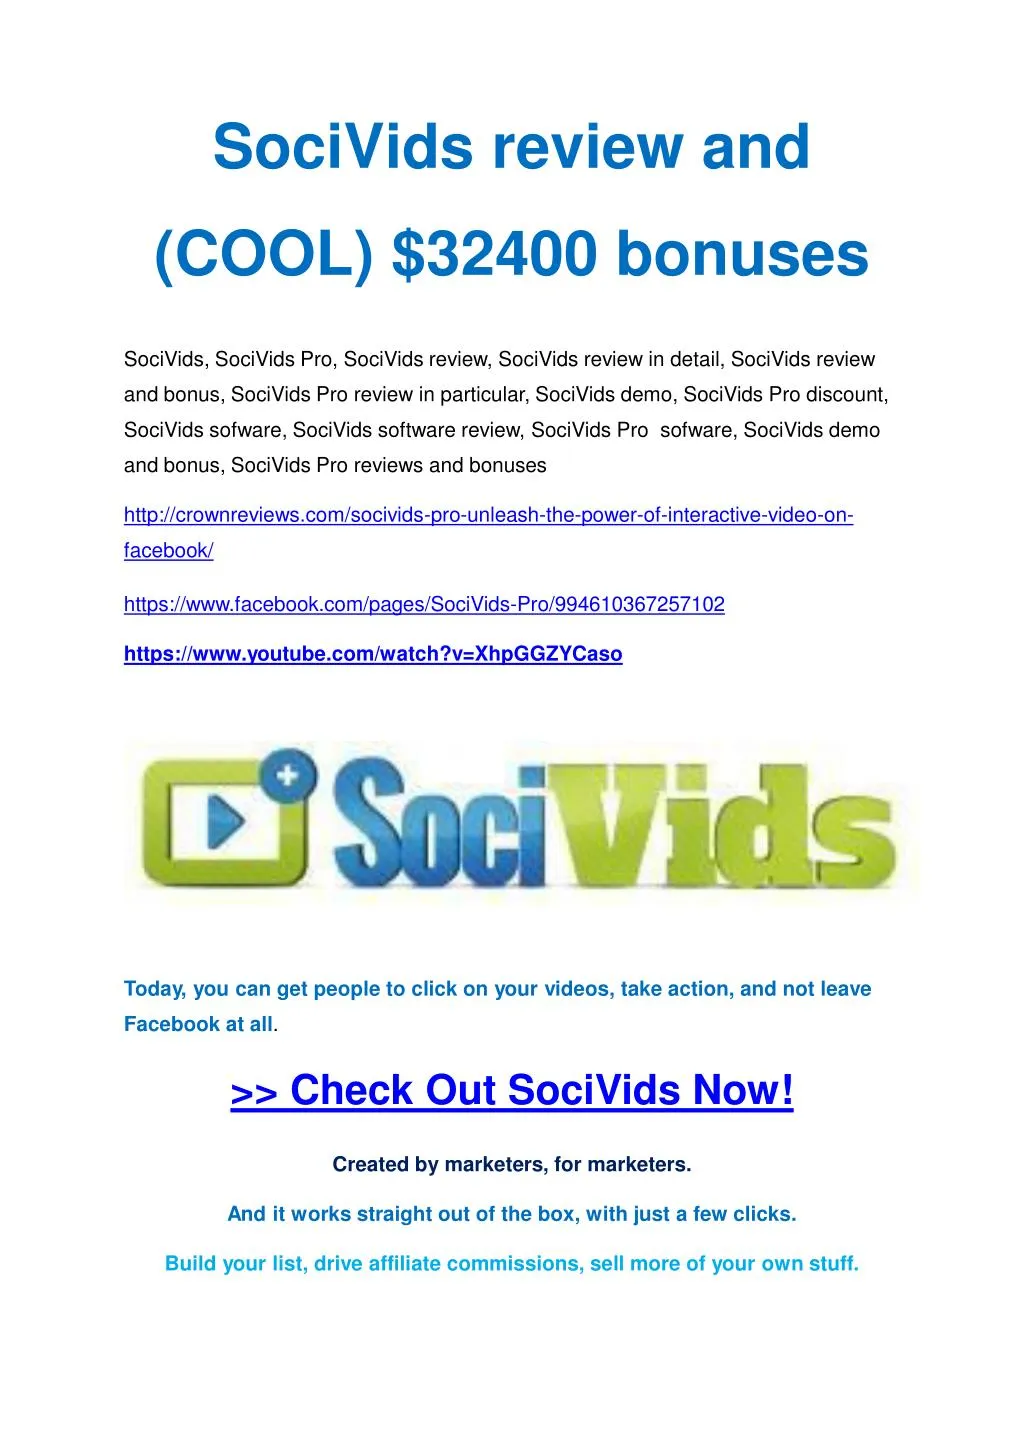 socivids review a n d cool 32 4 00 bonuses